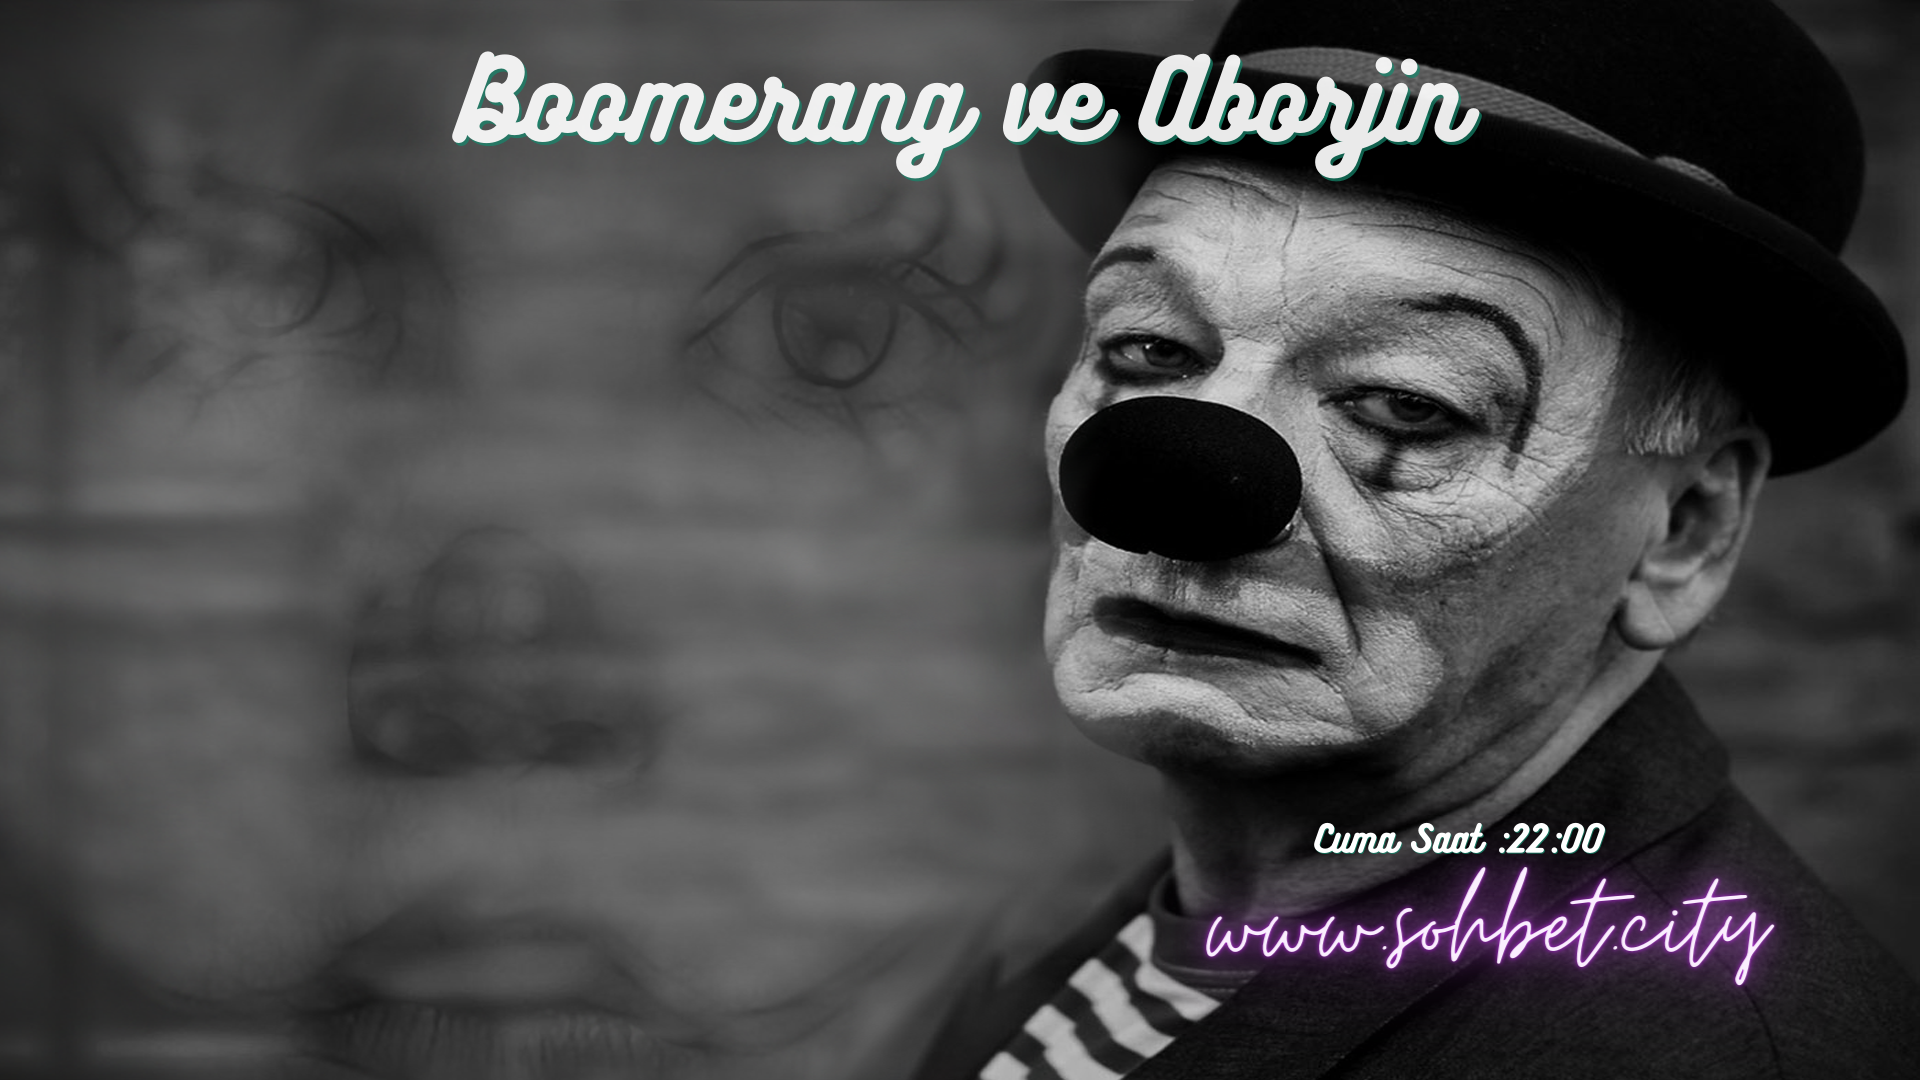 Boomerang ve Aborjin Show Her Cuma 22:00'de LimonFM.ORG'da!!